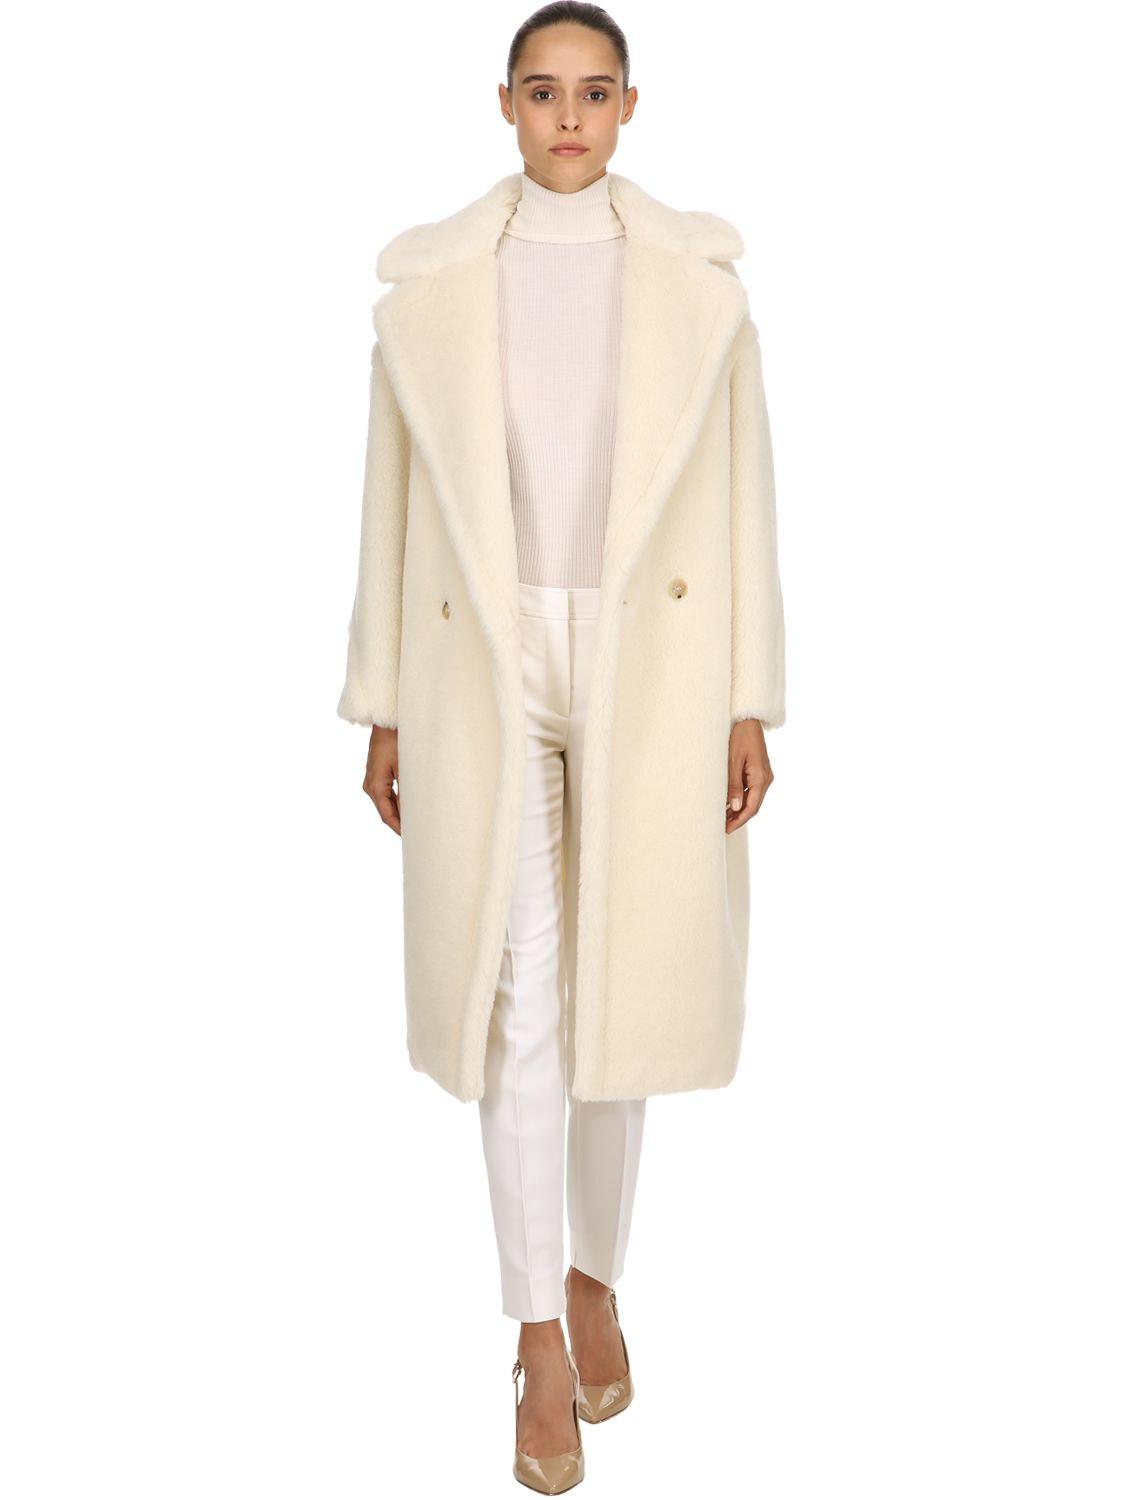 Max Mara Ginnata Alpaca & Wool Coat in White | Lyst